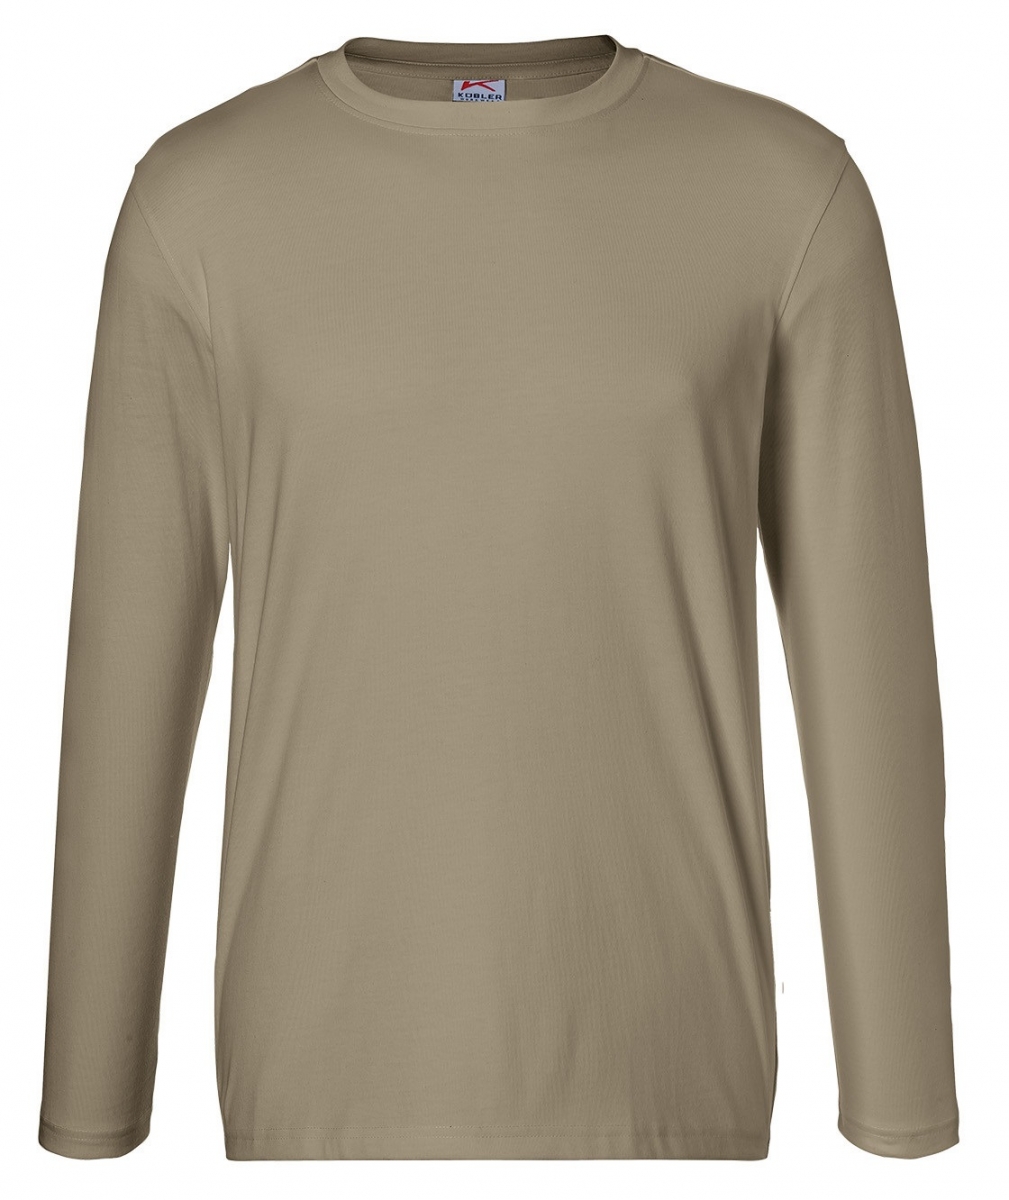 KBLER-Worker-Shirts, Workwear-Longsleeve, 190 g/m, sandbraun